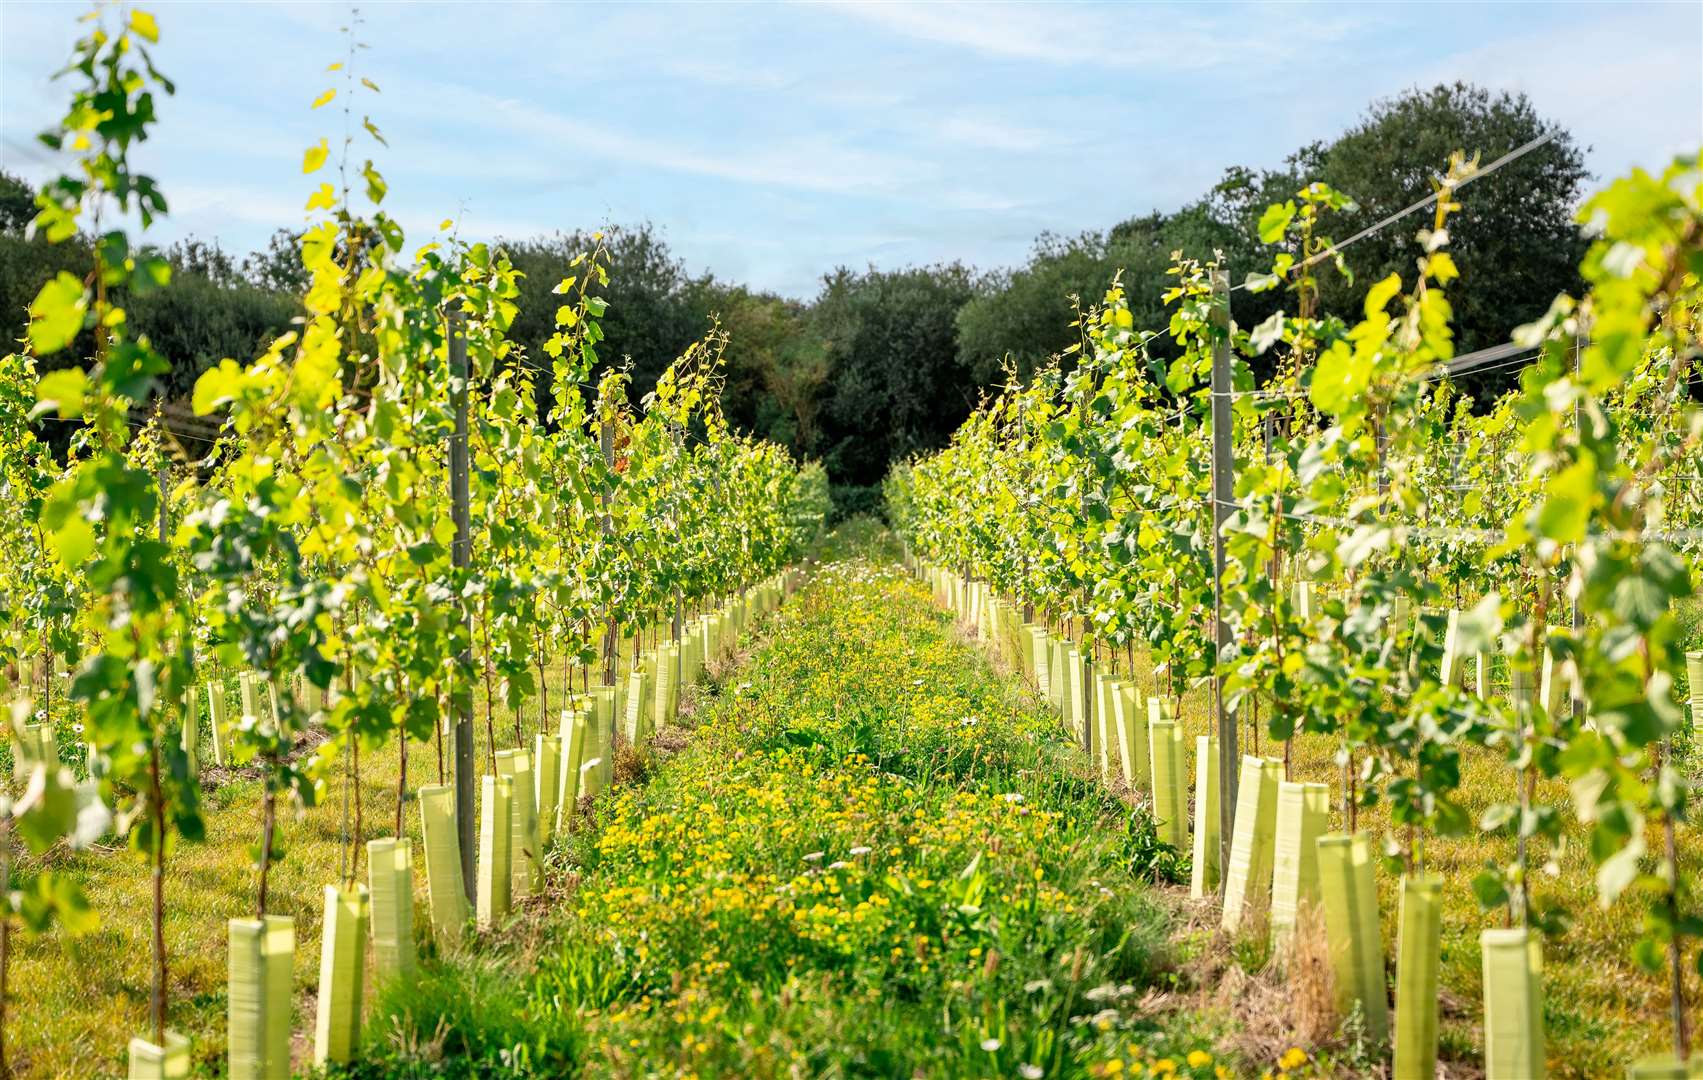 The Wildshark Vineyard aims to be “eco sustainable”. Picture: Elite Pubs/Wildshark Vineyard